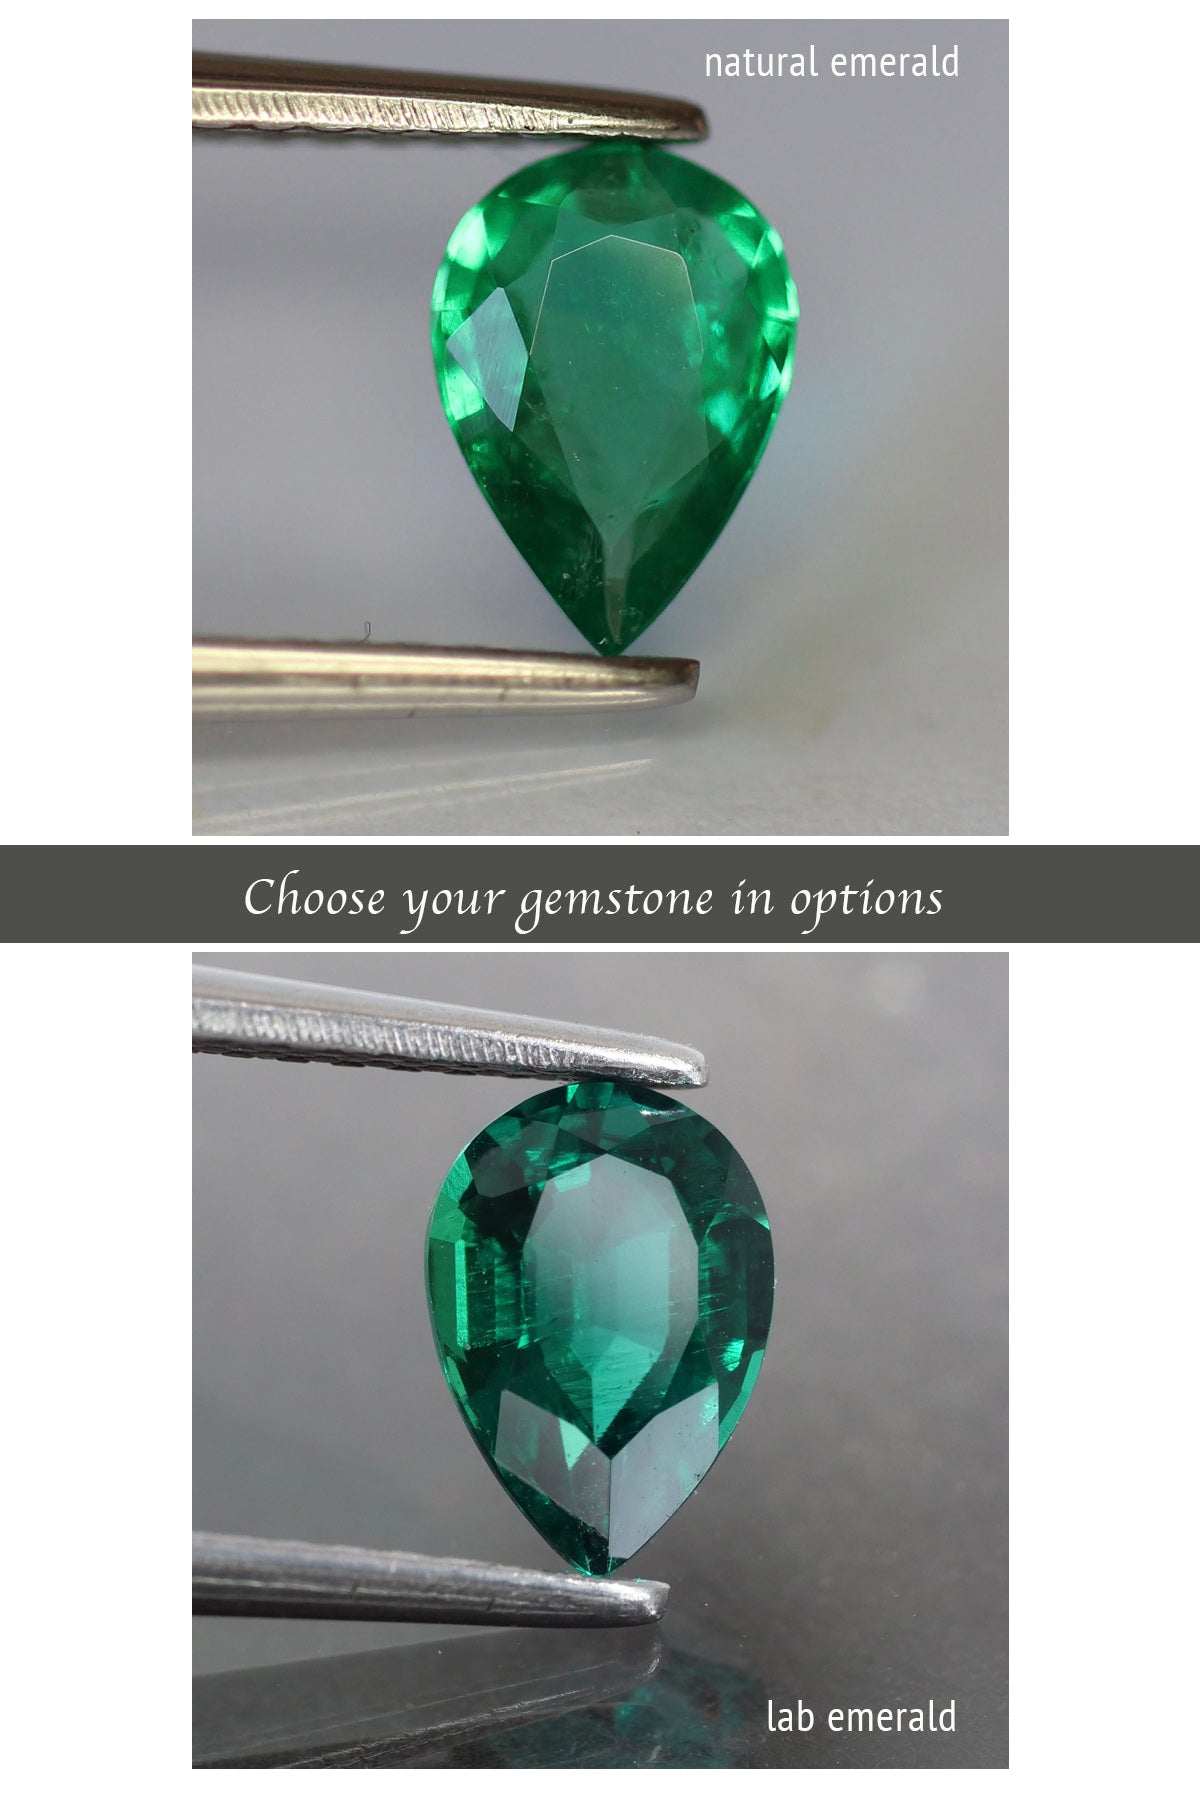 Teardrop emerald engagement ring, gold leaves ring / Azalea - Eden Garden Jewelry™